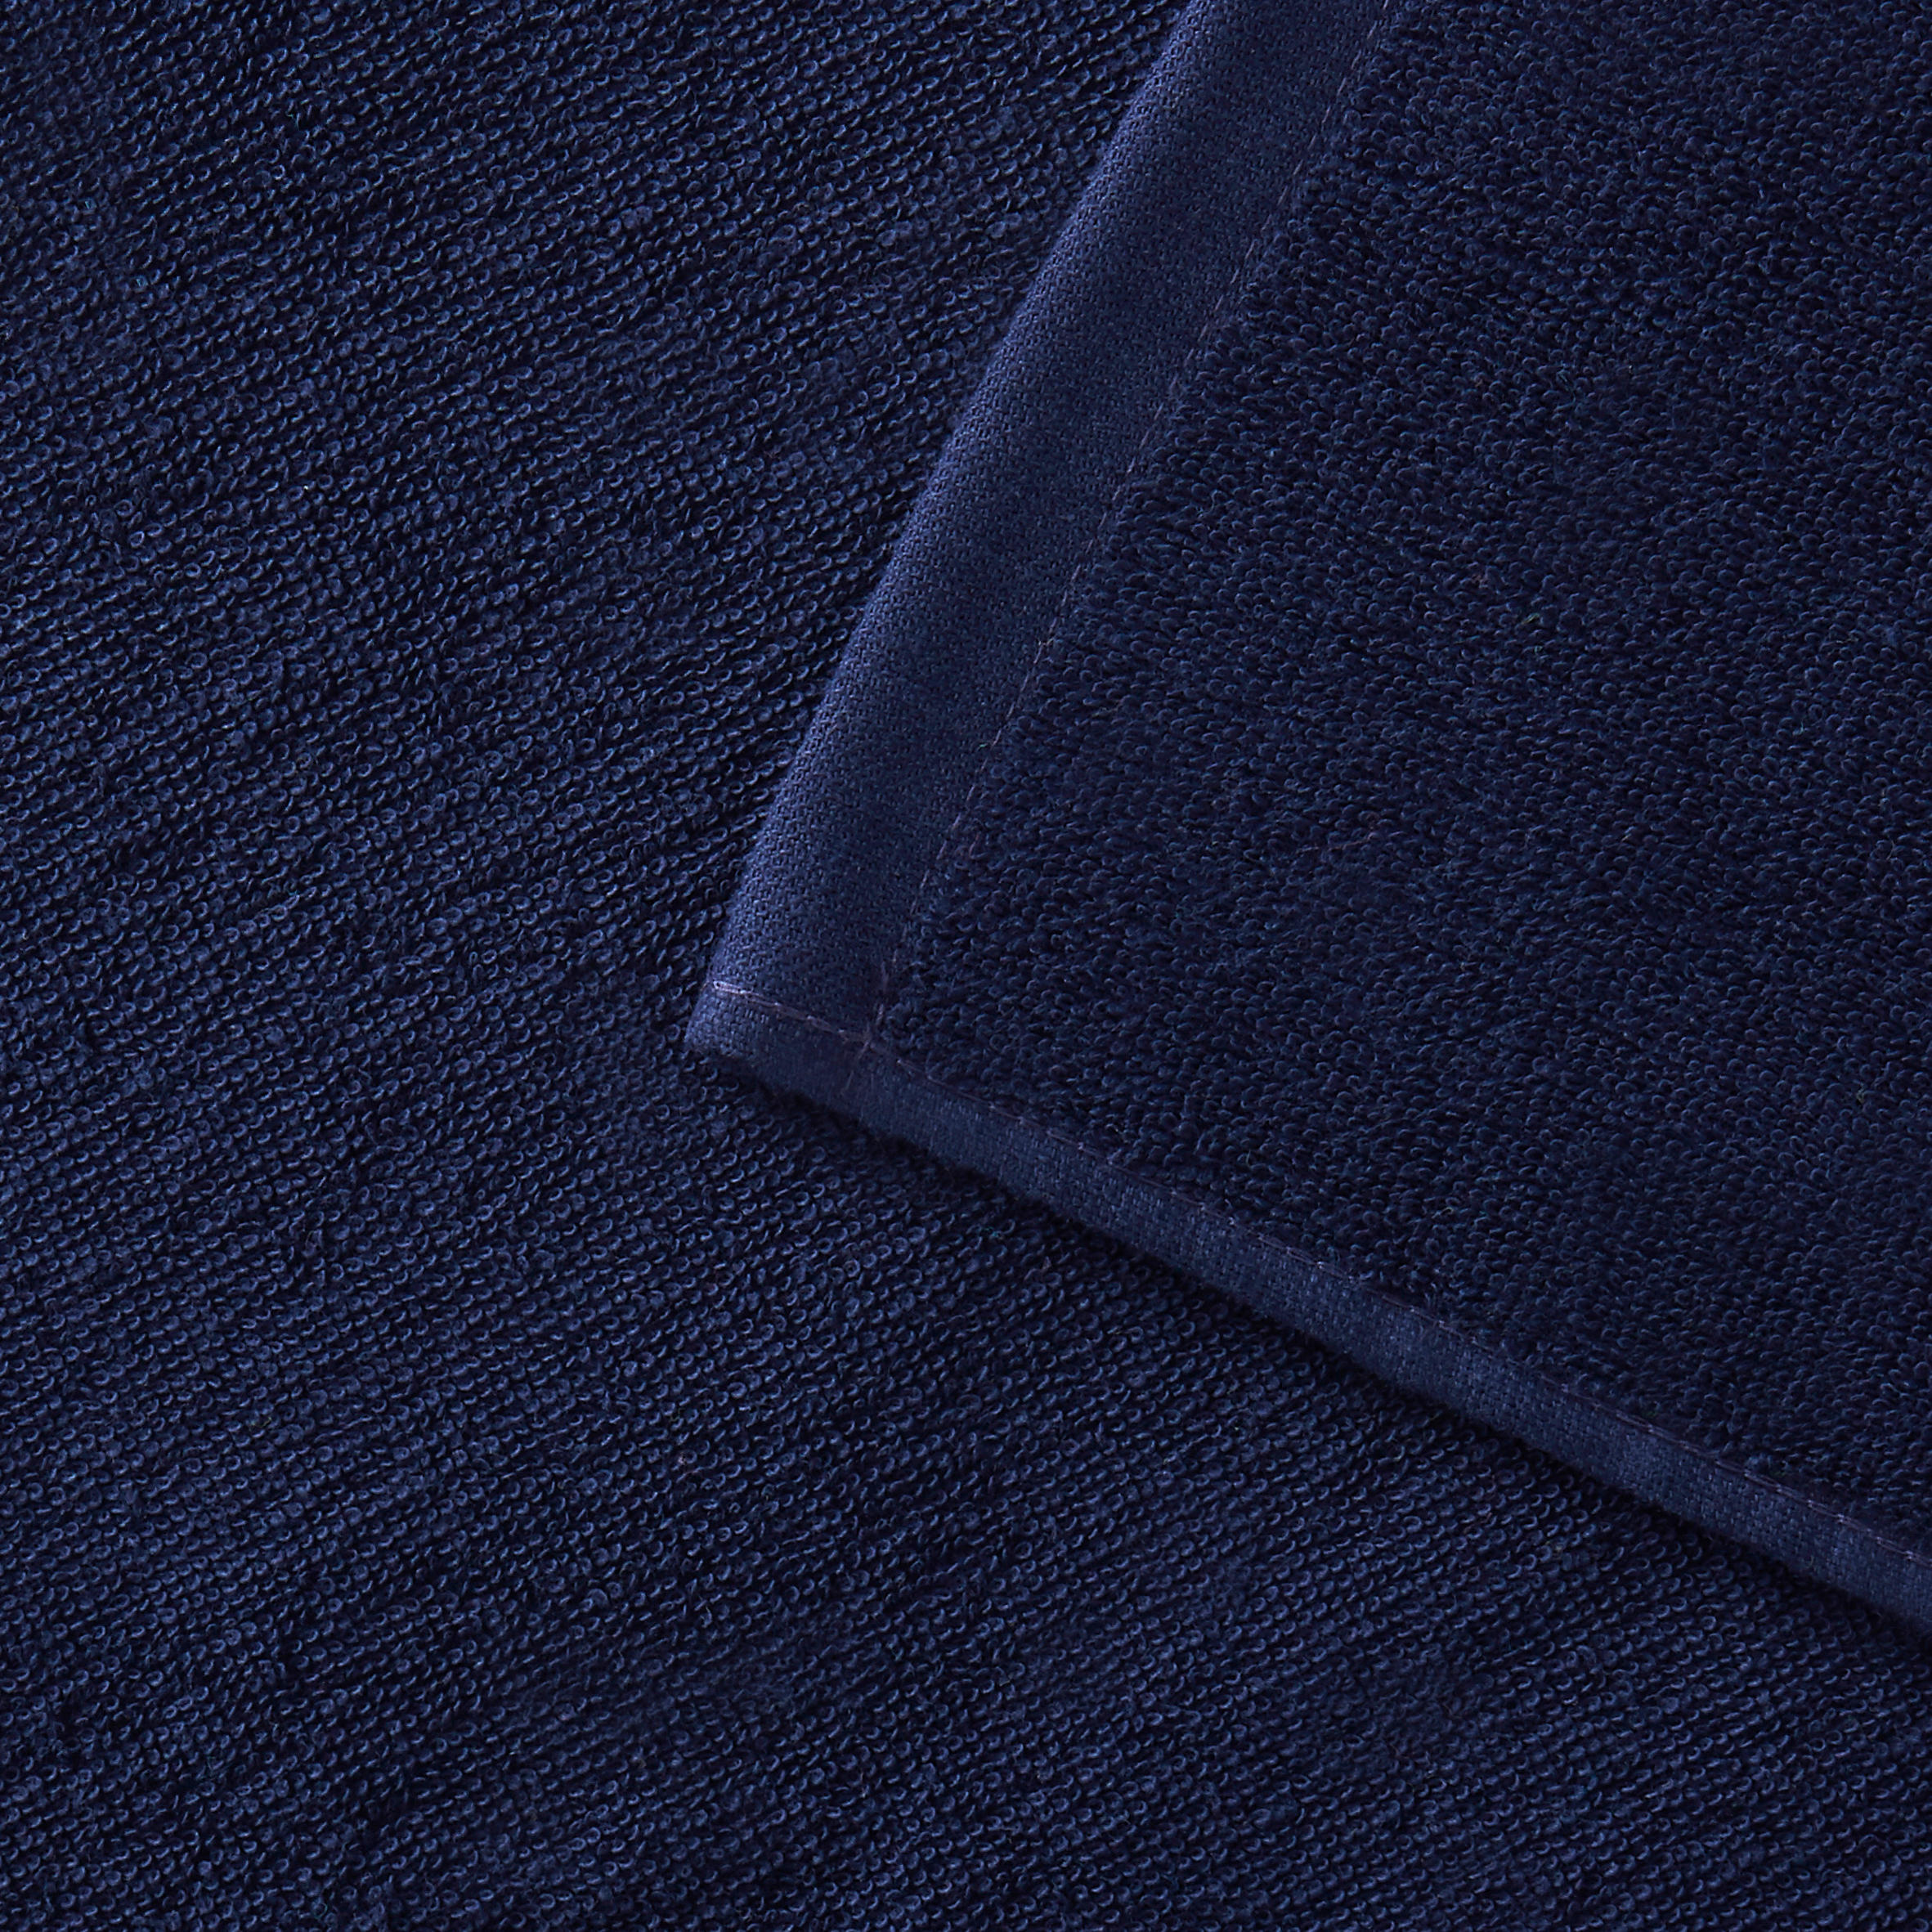 Beach Towel 145 x 85 cm - Dark Blue 3/4